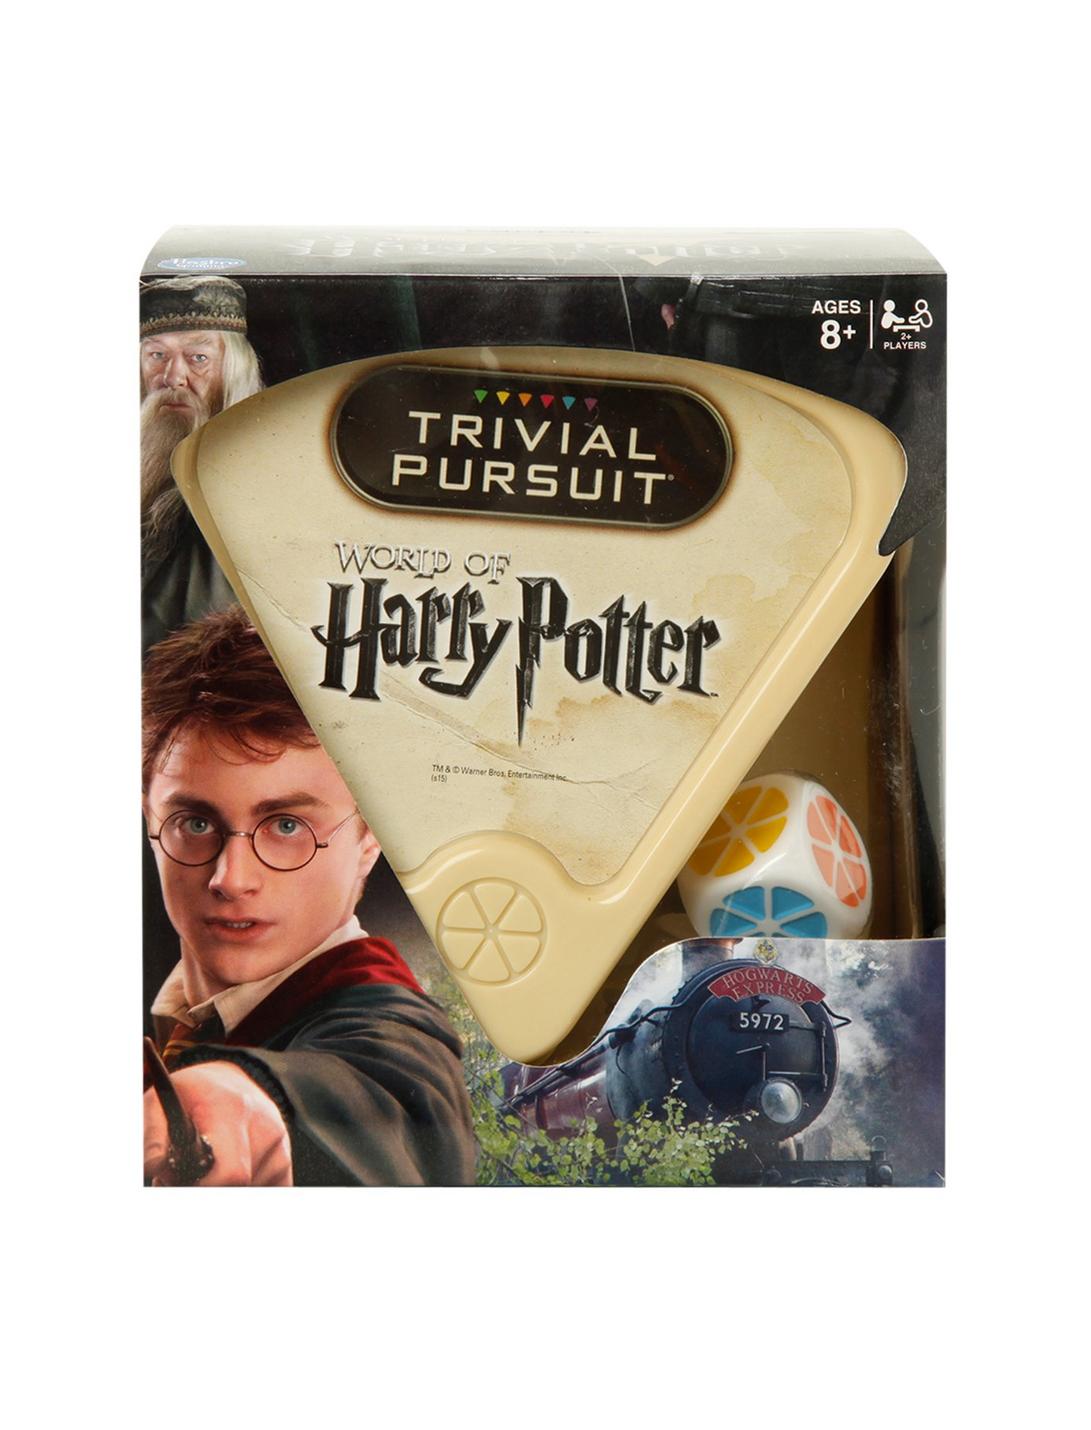 Harry Potter Trivial Pursuit Game